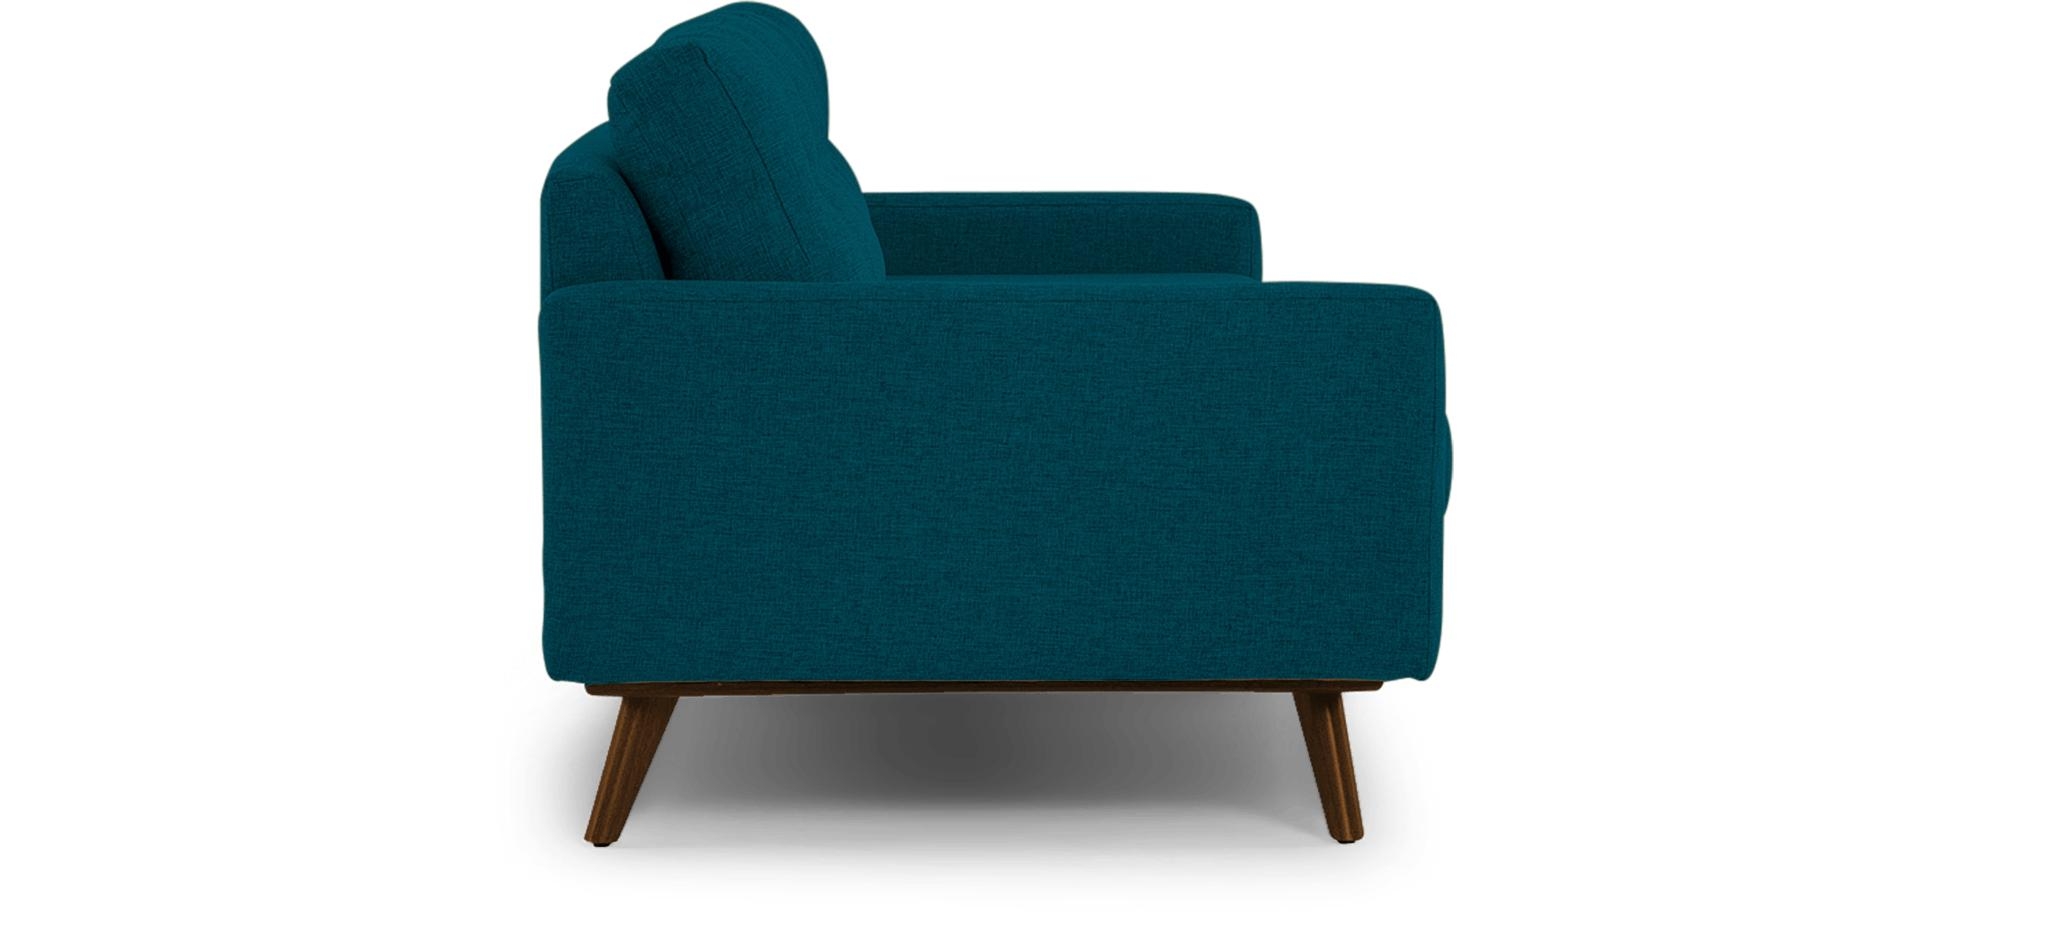 Blue Hopson Mid Century Modern Grand Sofa - Key Largo Zenith Teal - Mocha - Image 2